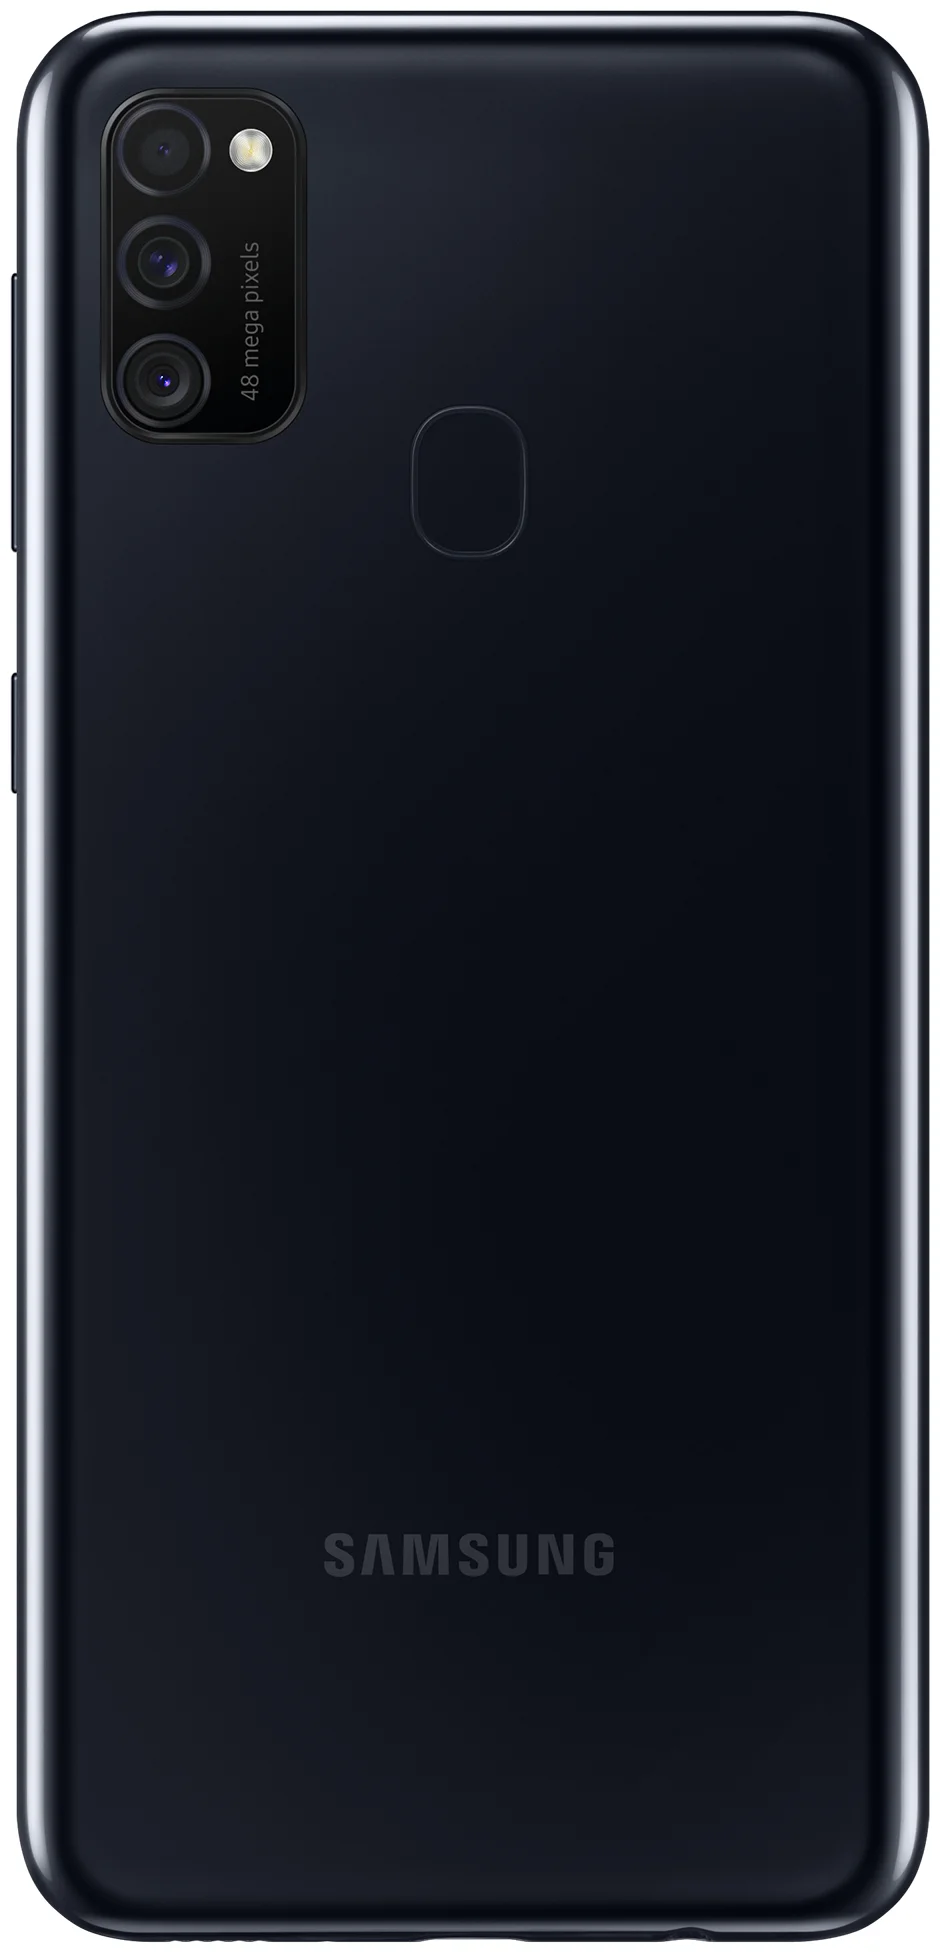 Samsung Galaxy M21 - операционная система: Android 10